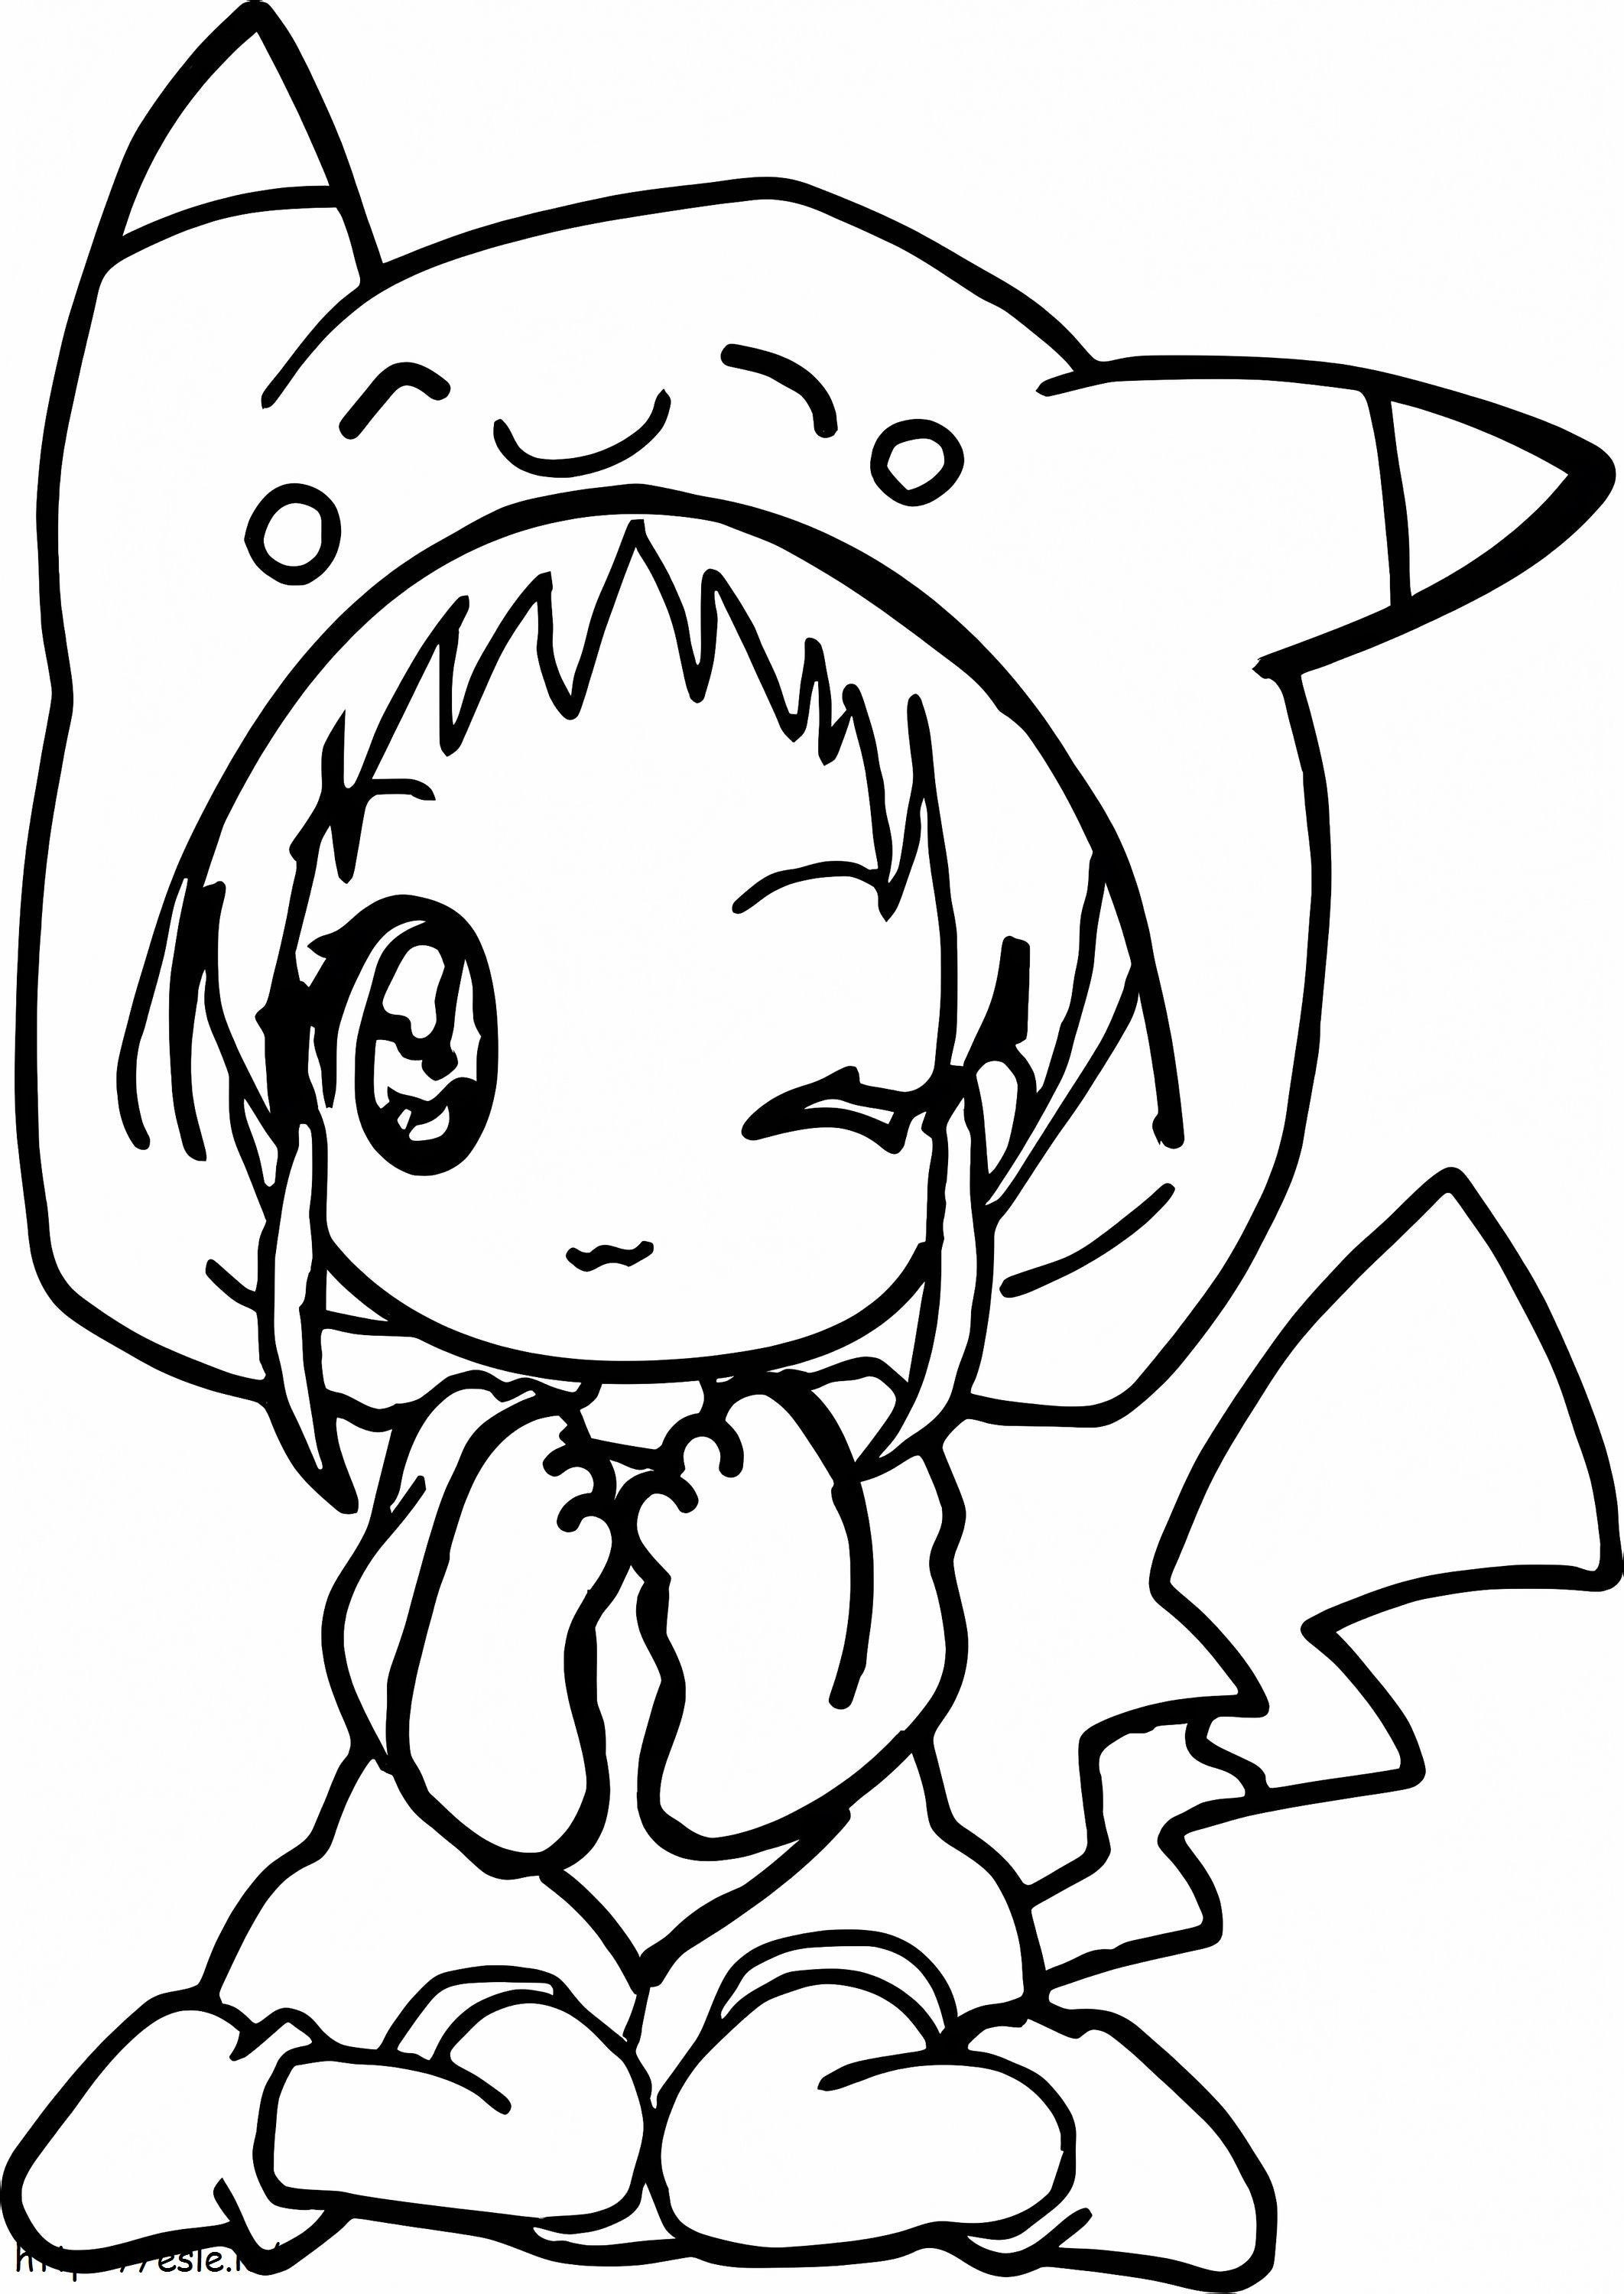 Coloriage Chica Pikachu Kawaii à imprimer dessin